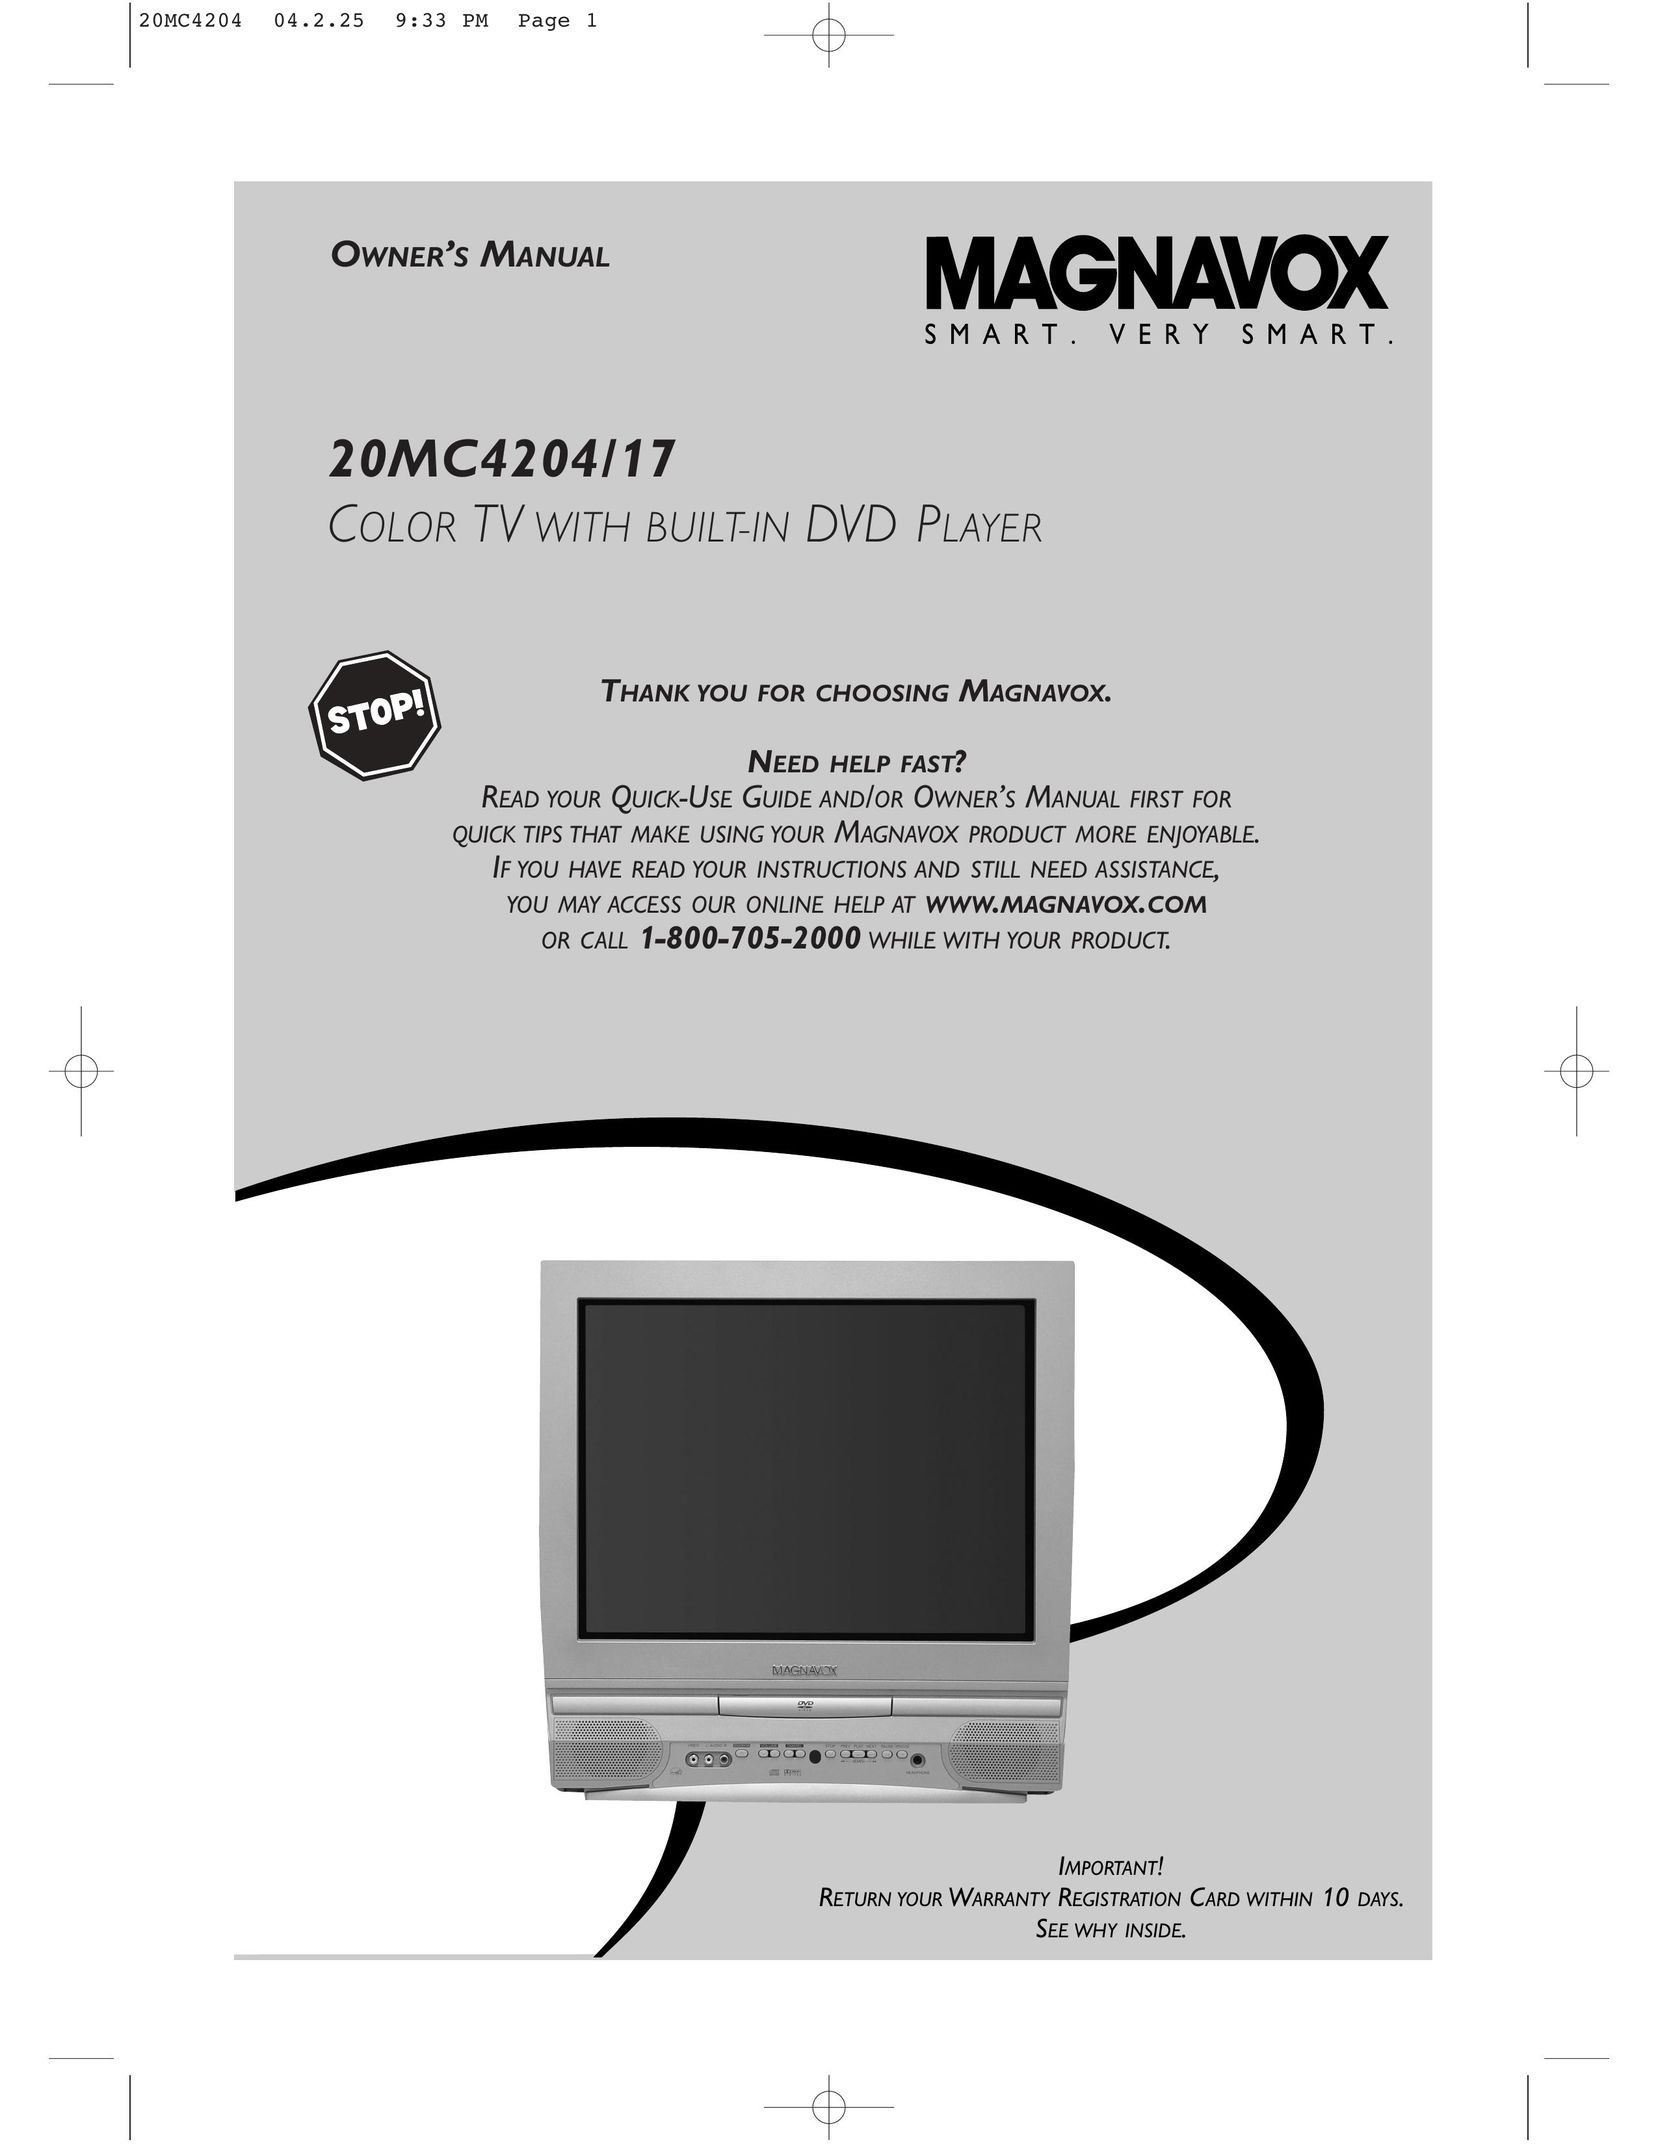 Magnavox 20MC4204/17 TV DVD Combo User Manual